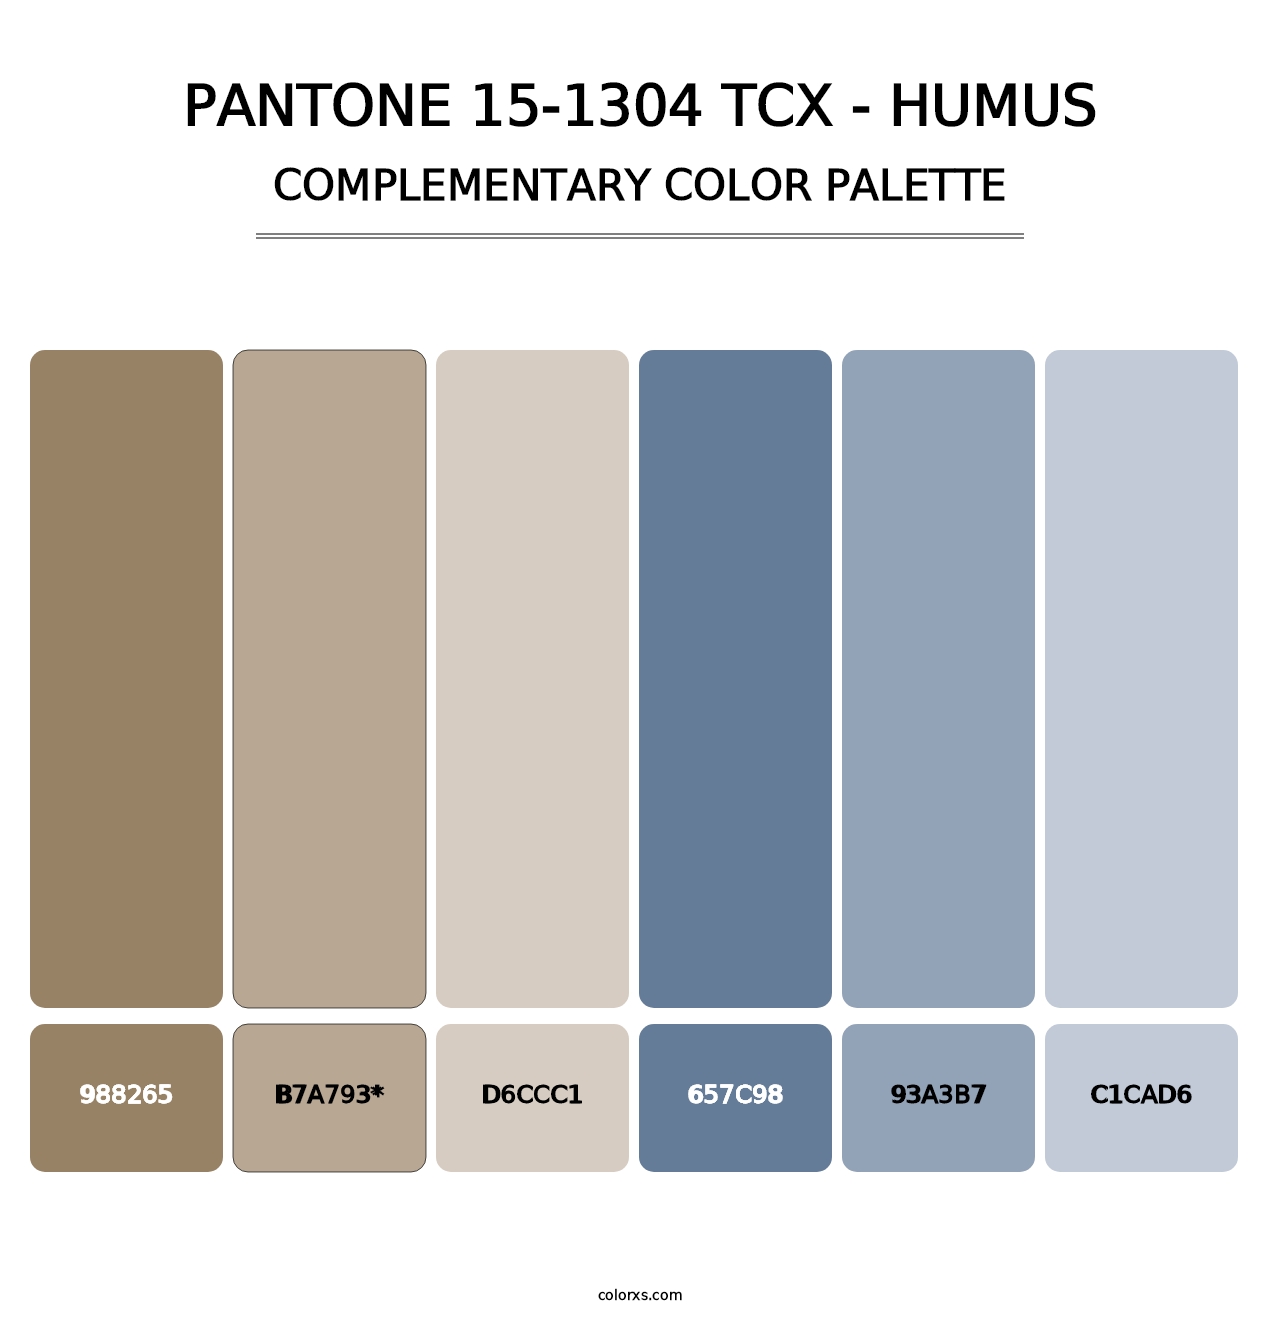 PANTONE 15-1304 TCX - Humus - Complementary Color Palette